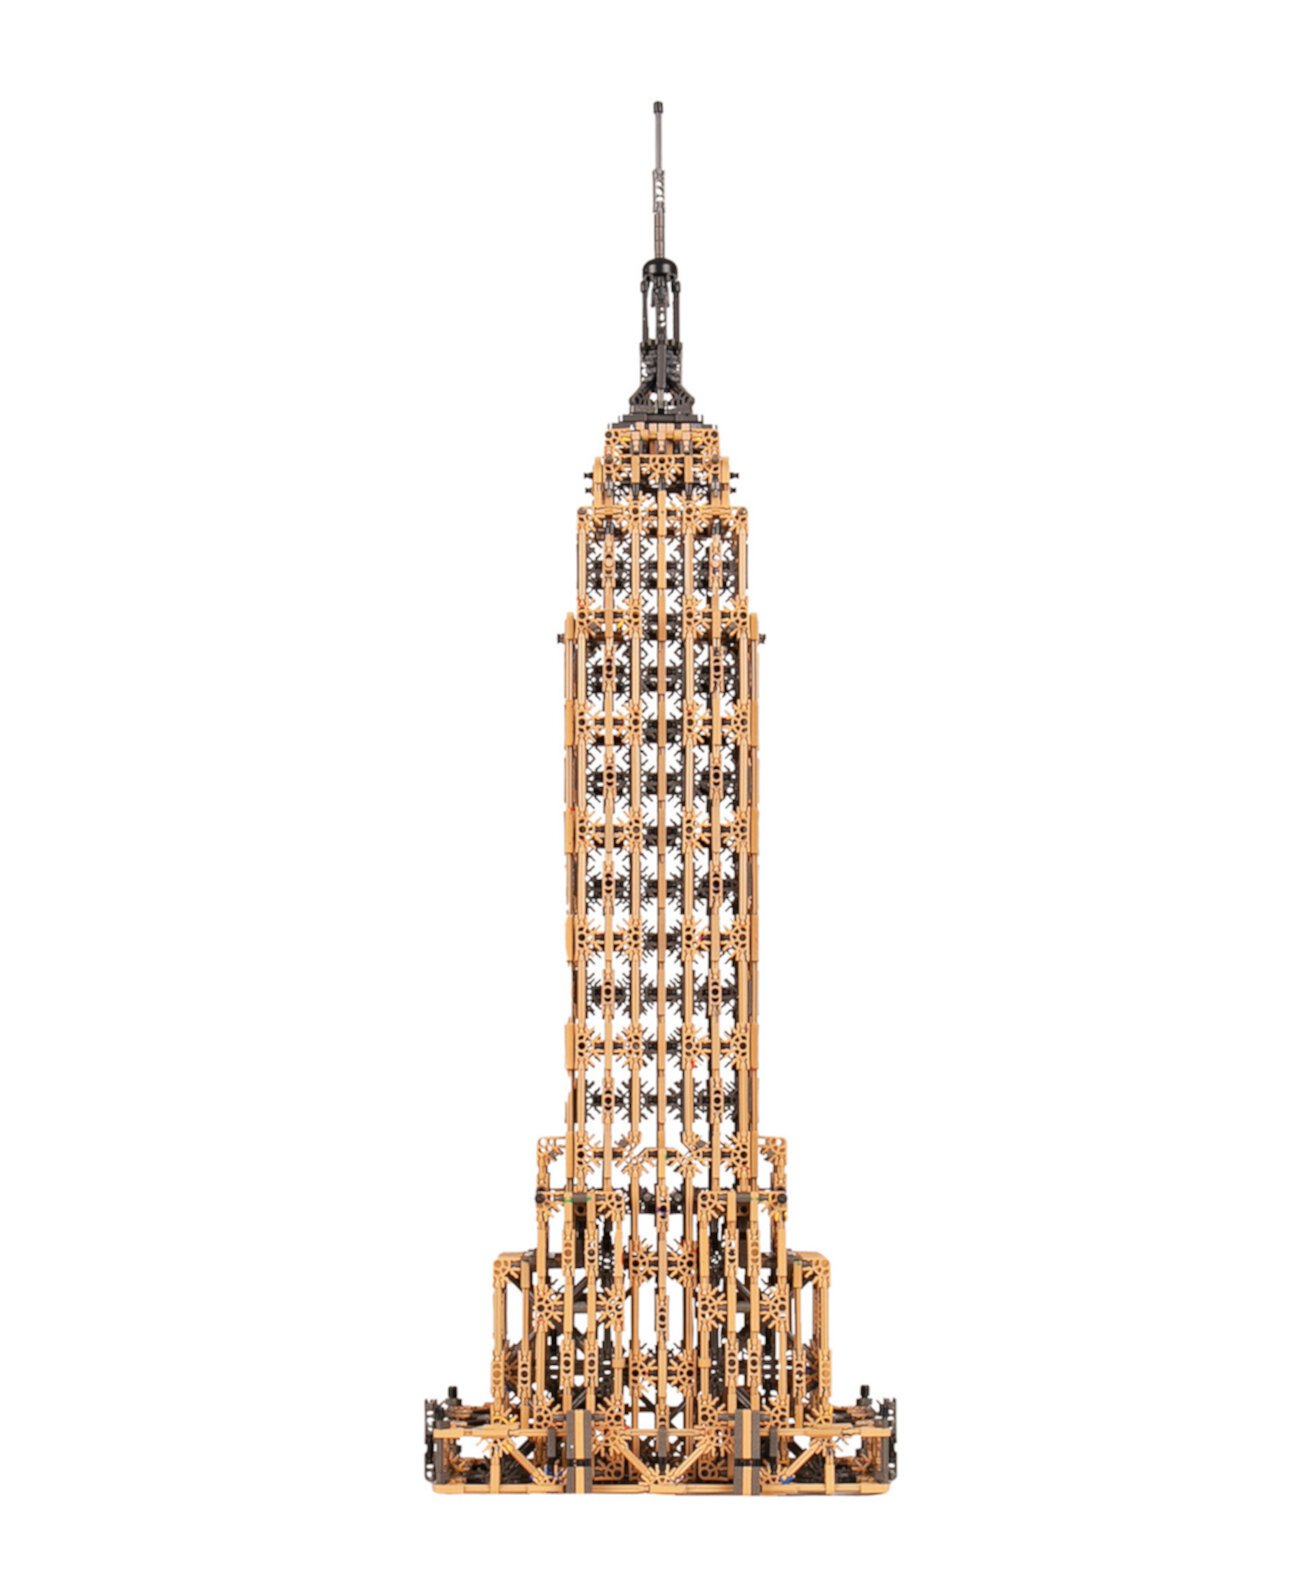 Набор зданий Empire State из 2122 предметов «Архитектура» Knex